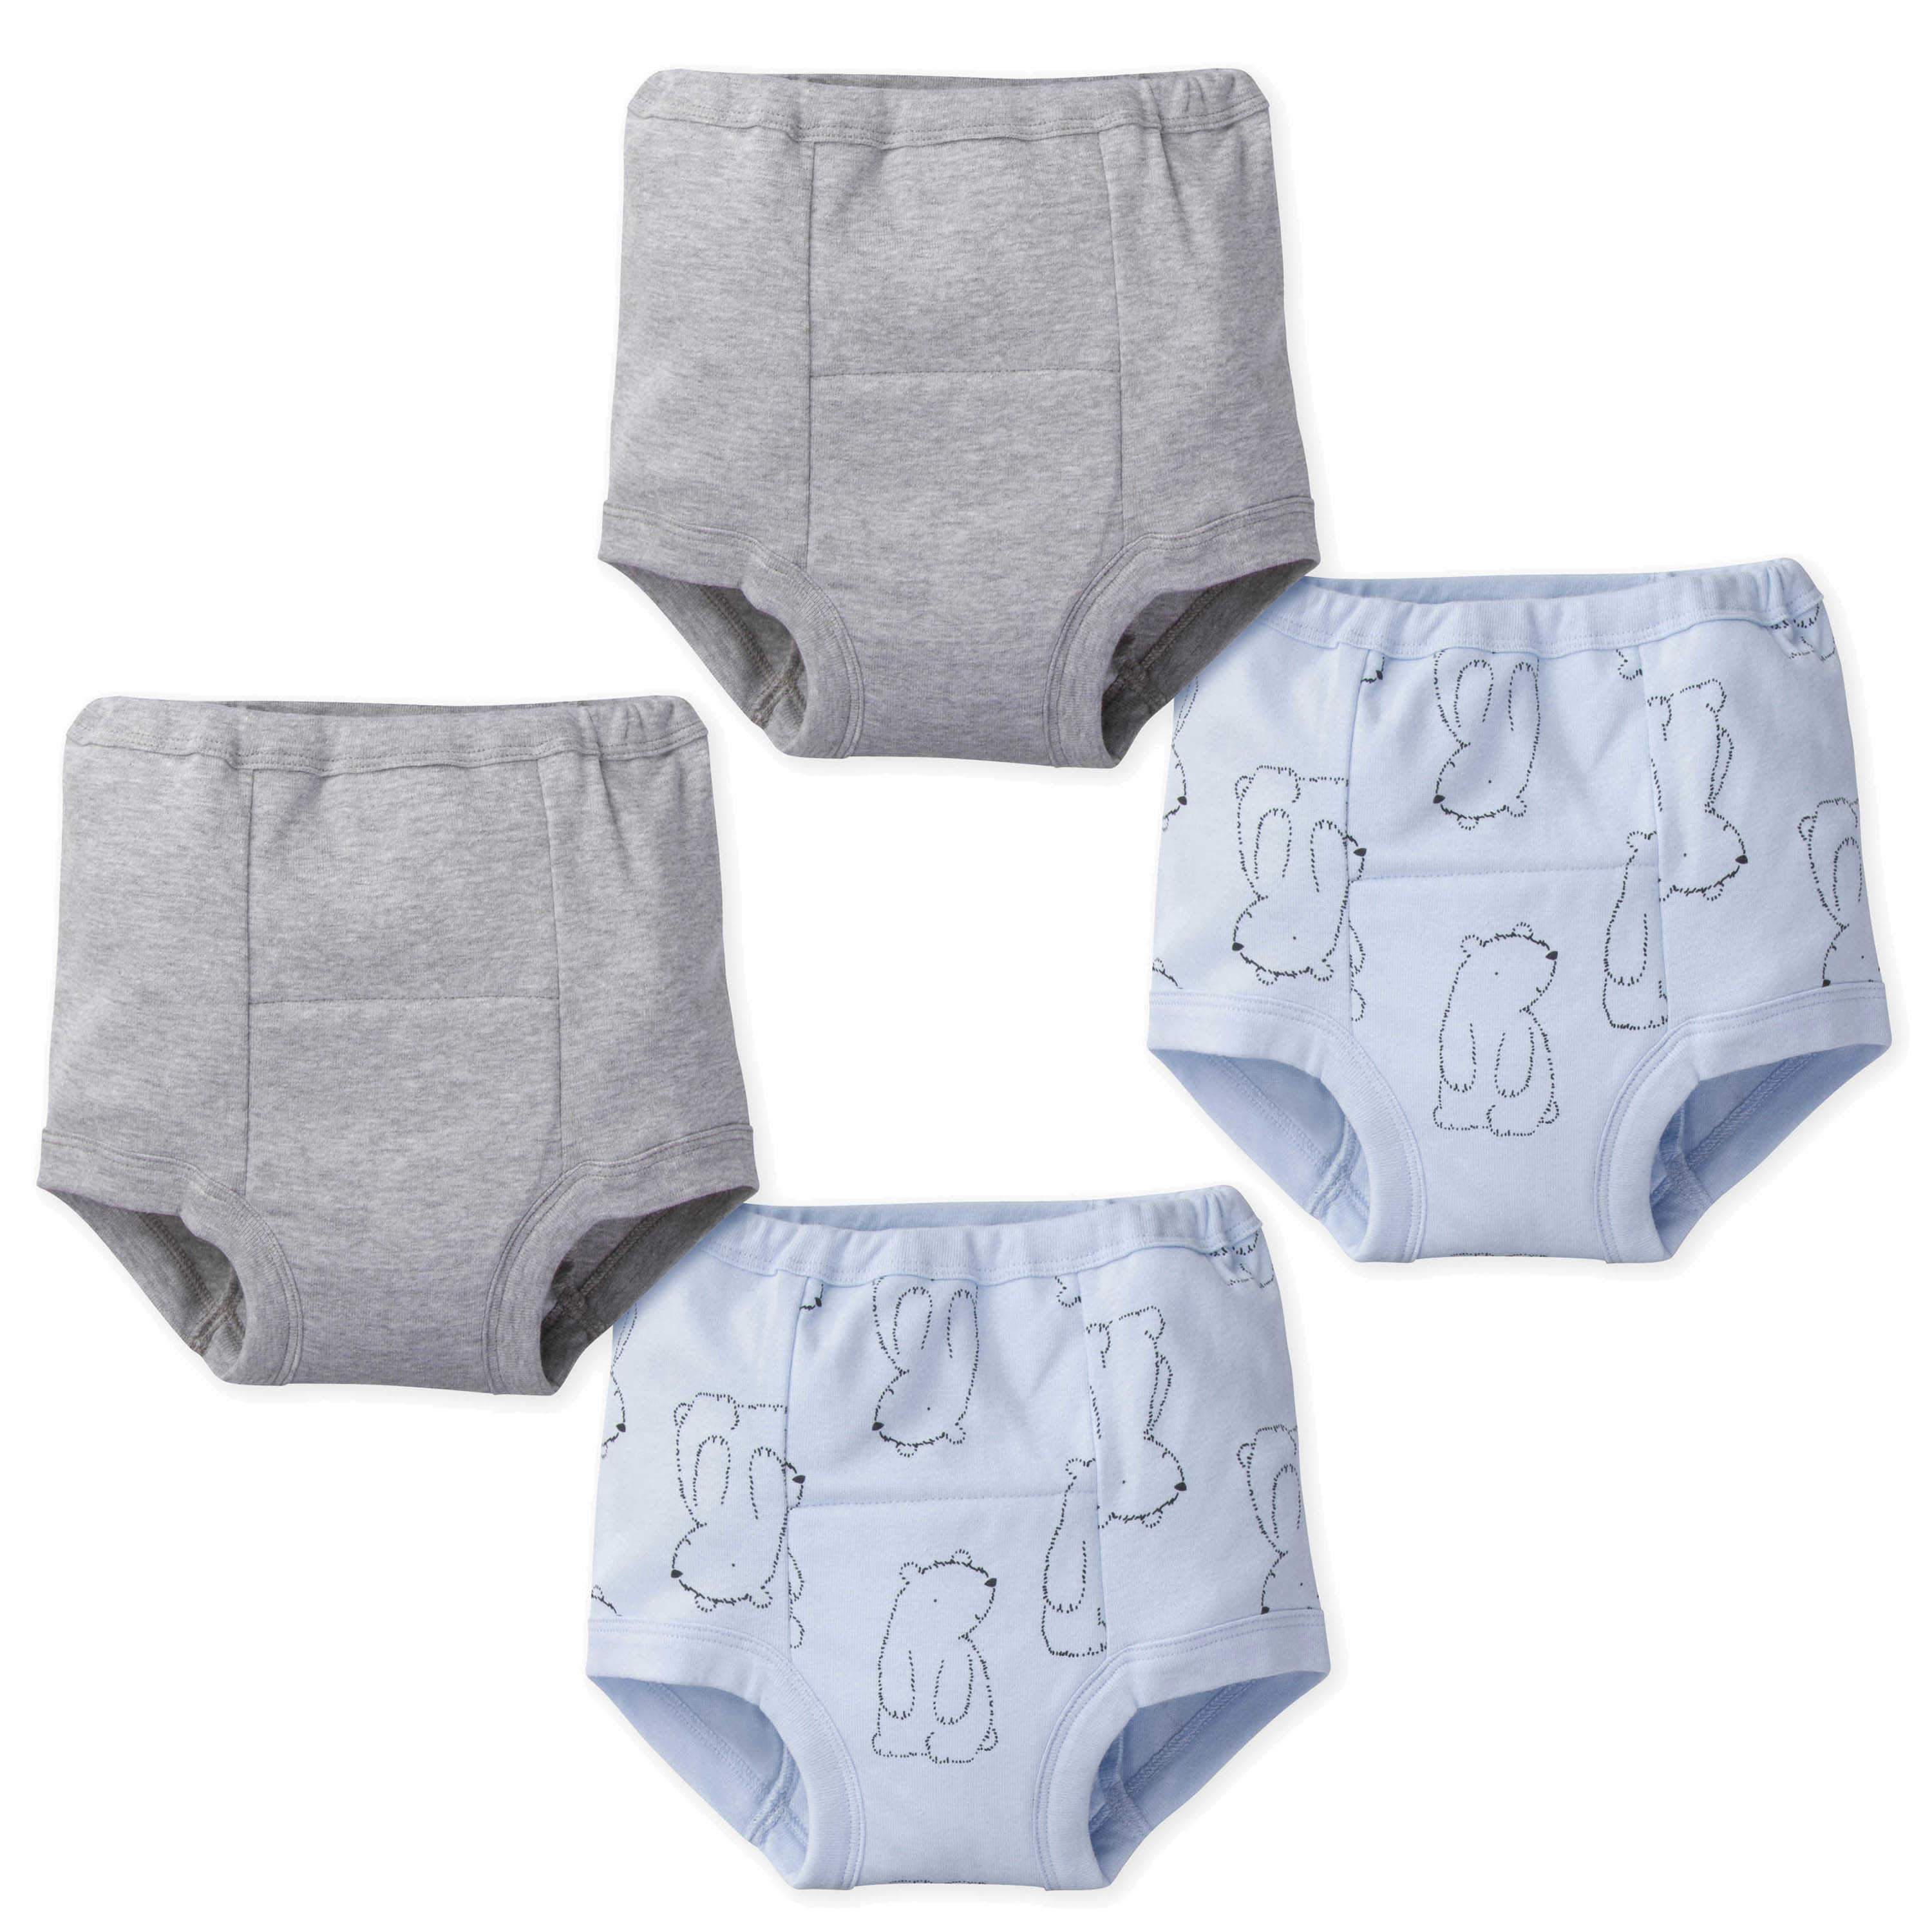 Buy Gerber Baby Boys' 4 Pack Training Pants Toddler Underwear, Blue Sport,  3T at